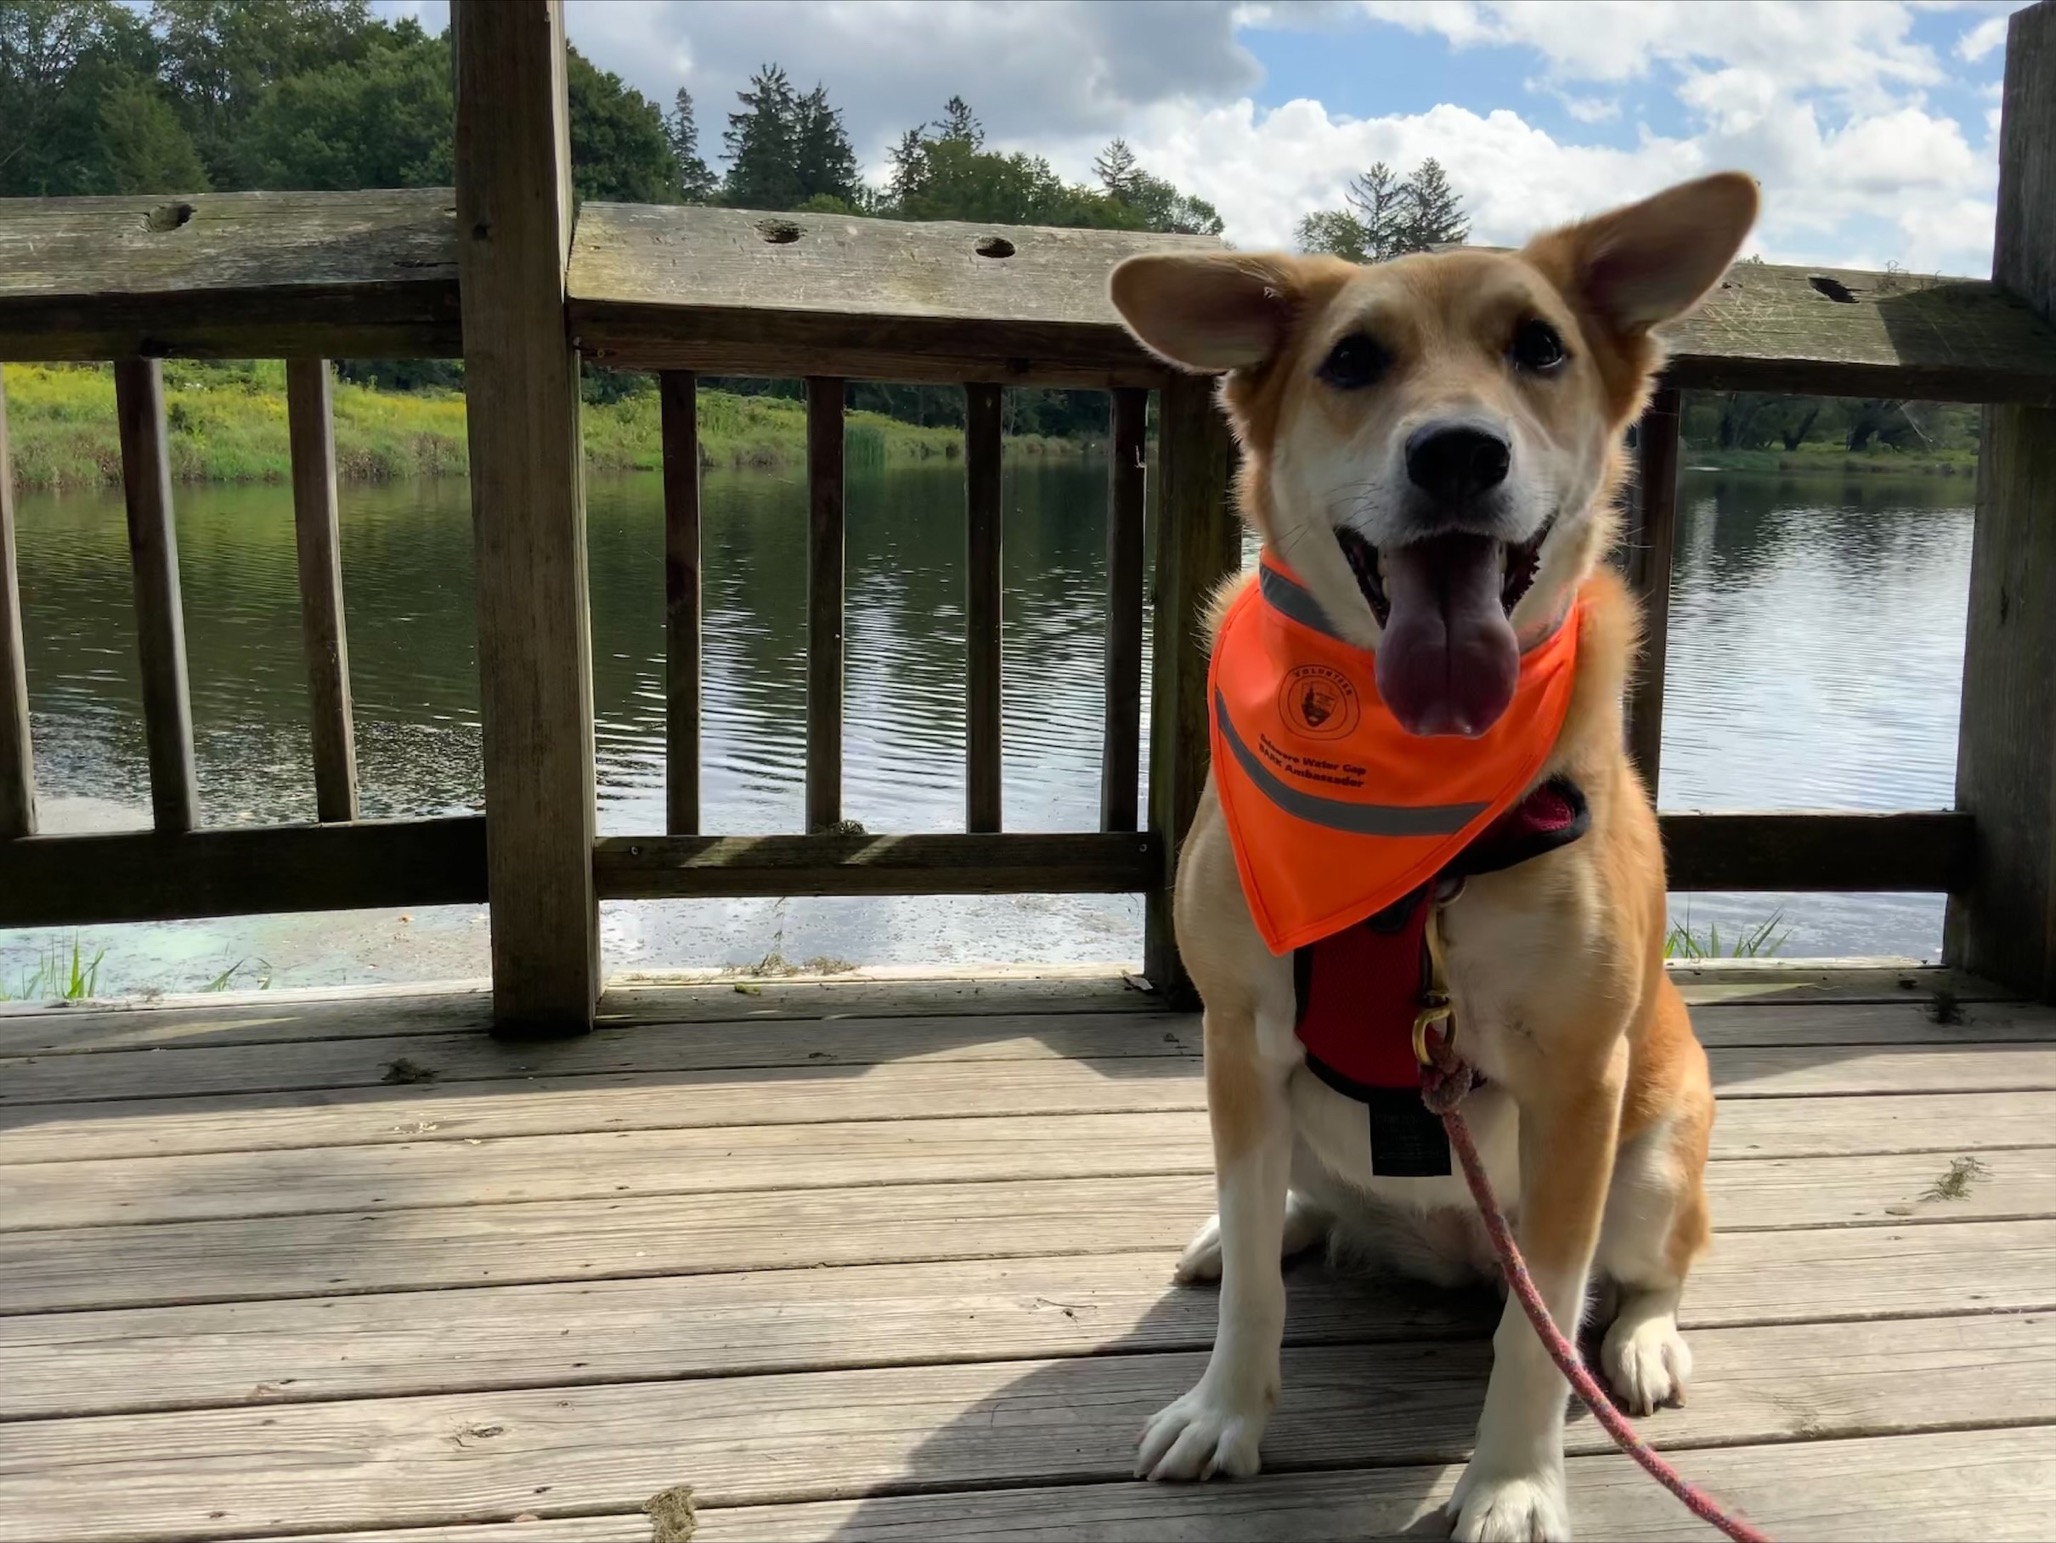 A dog with big ears sitting on a deck at a lake wearing an orange bandana